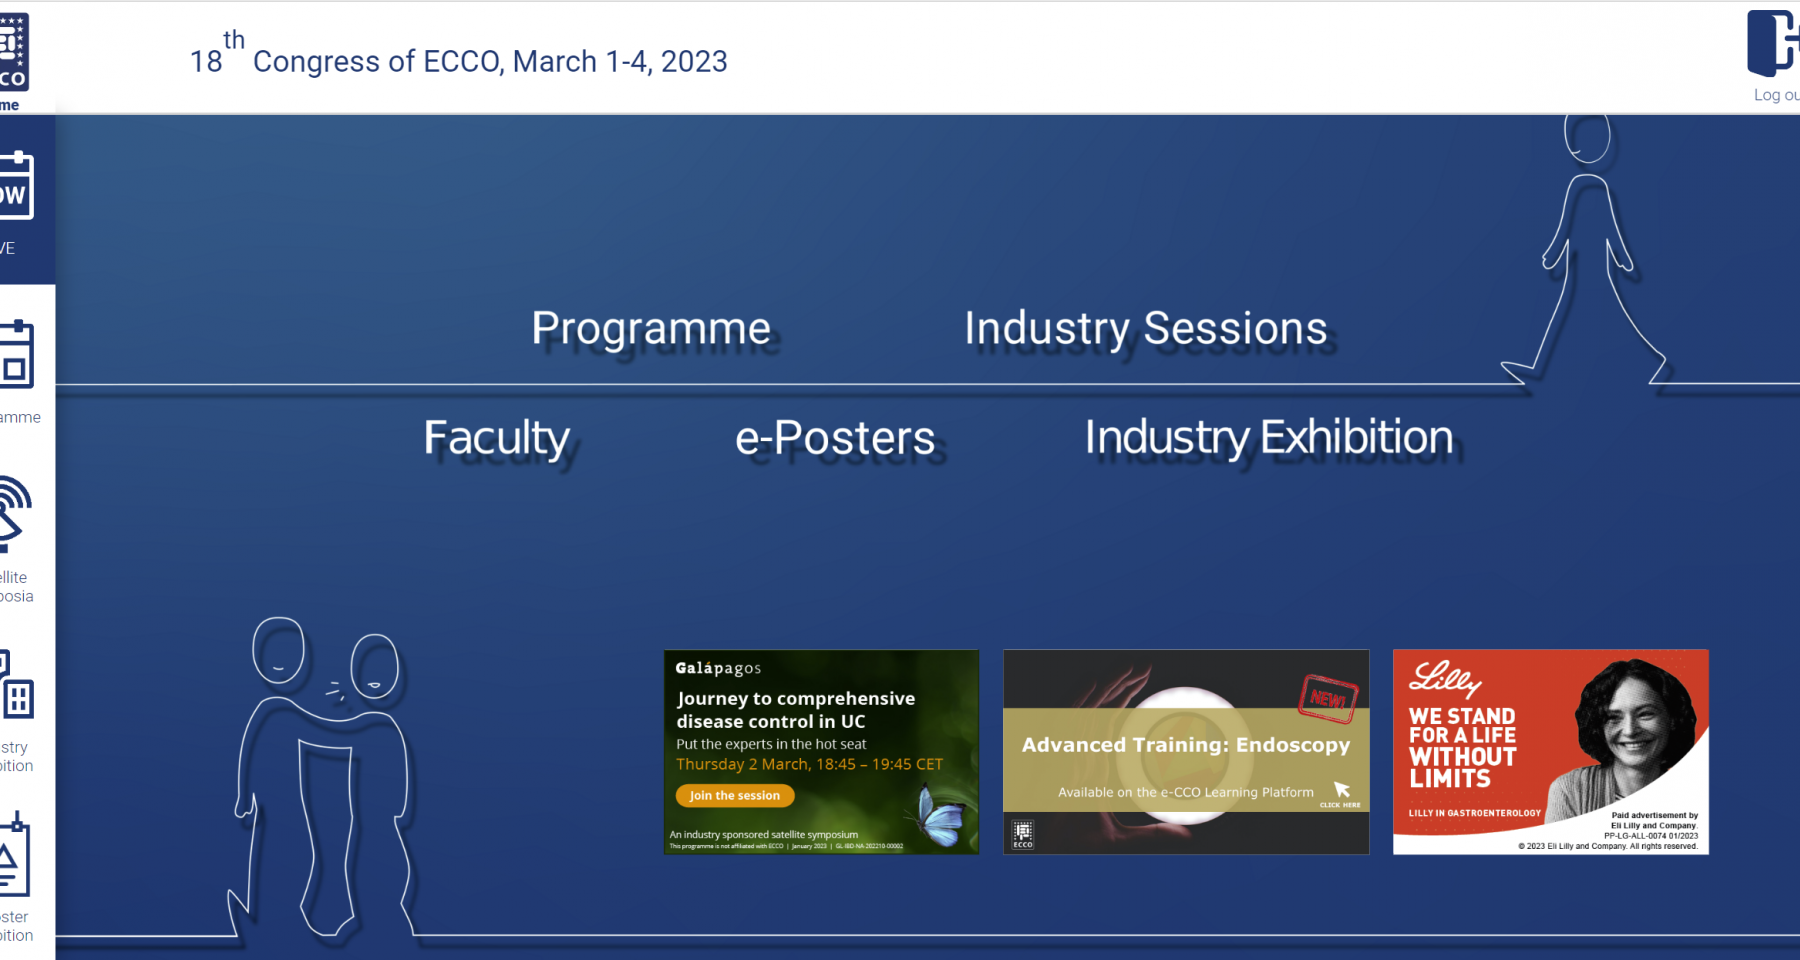 ECCO'23 Virtual Congress Platform